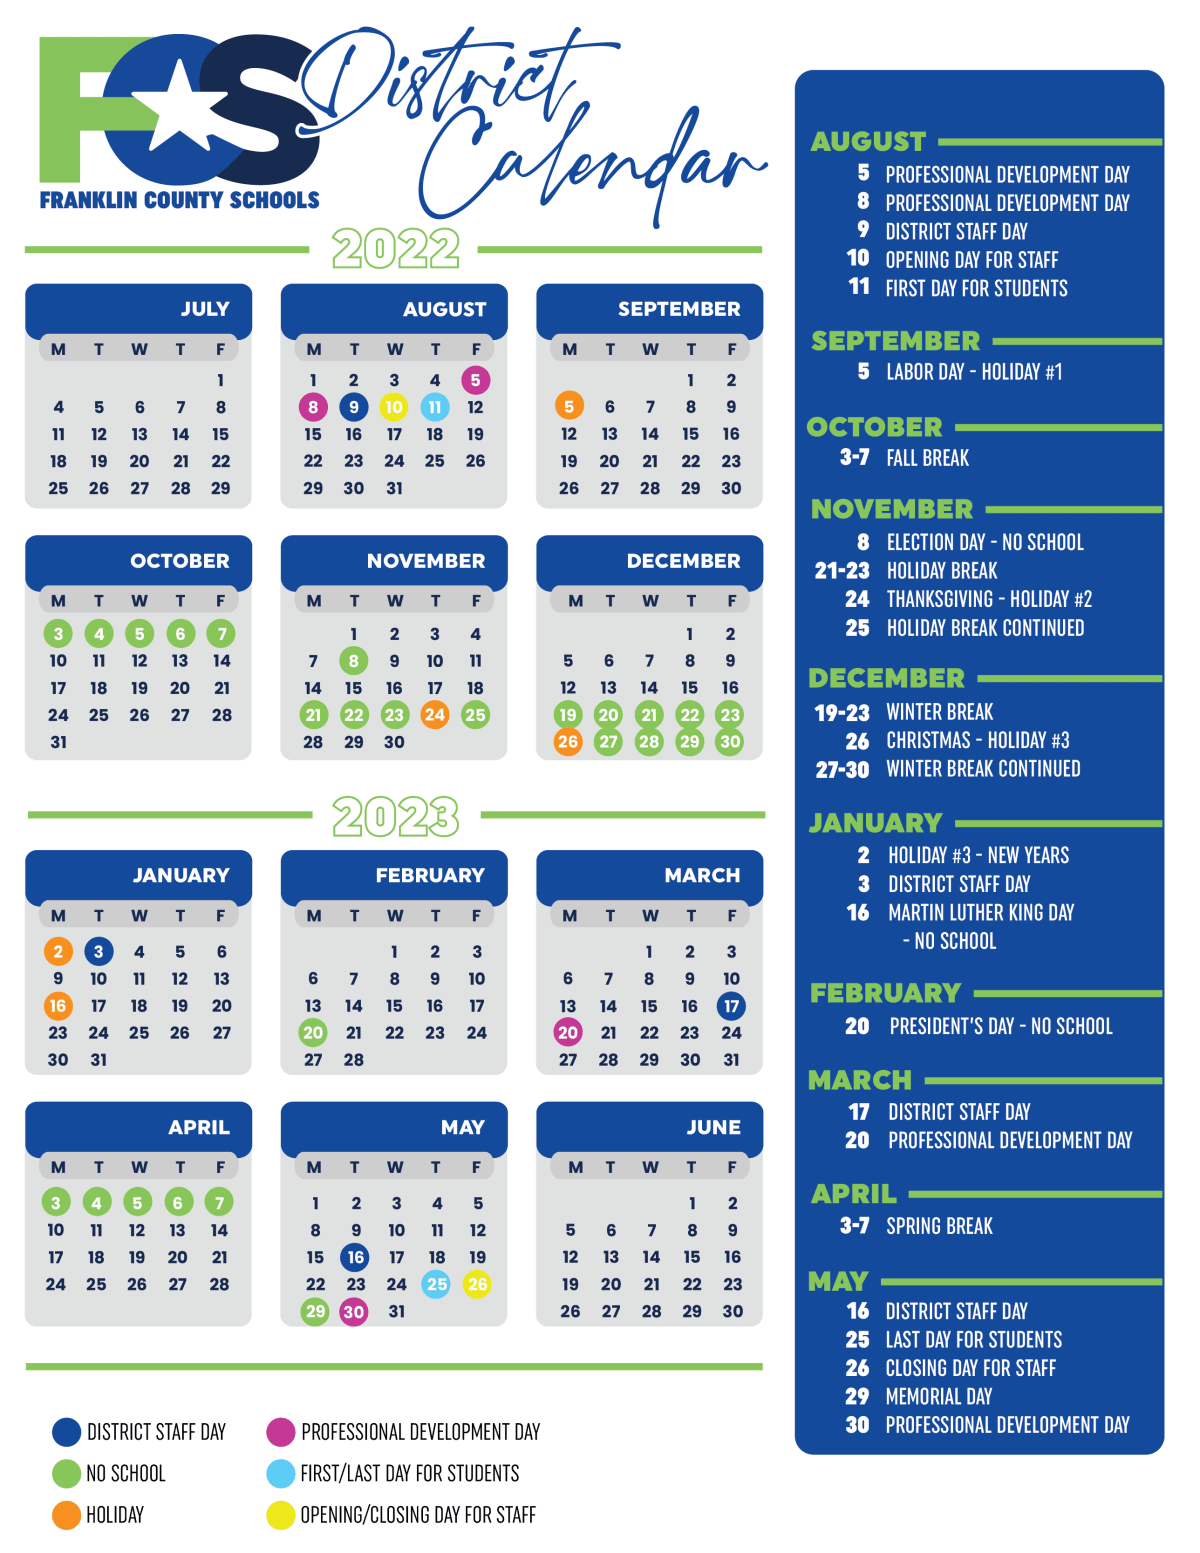 Franklin County Schools Calendar 2023 and 2024 - PublicHolidays.com